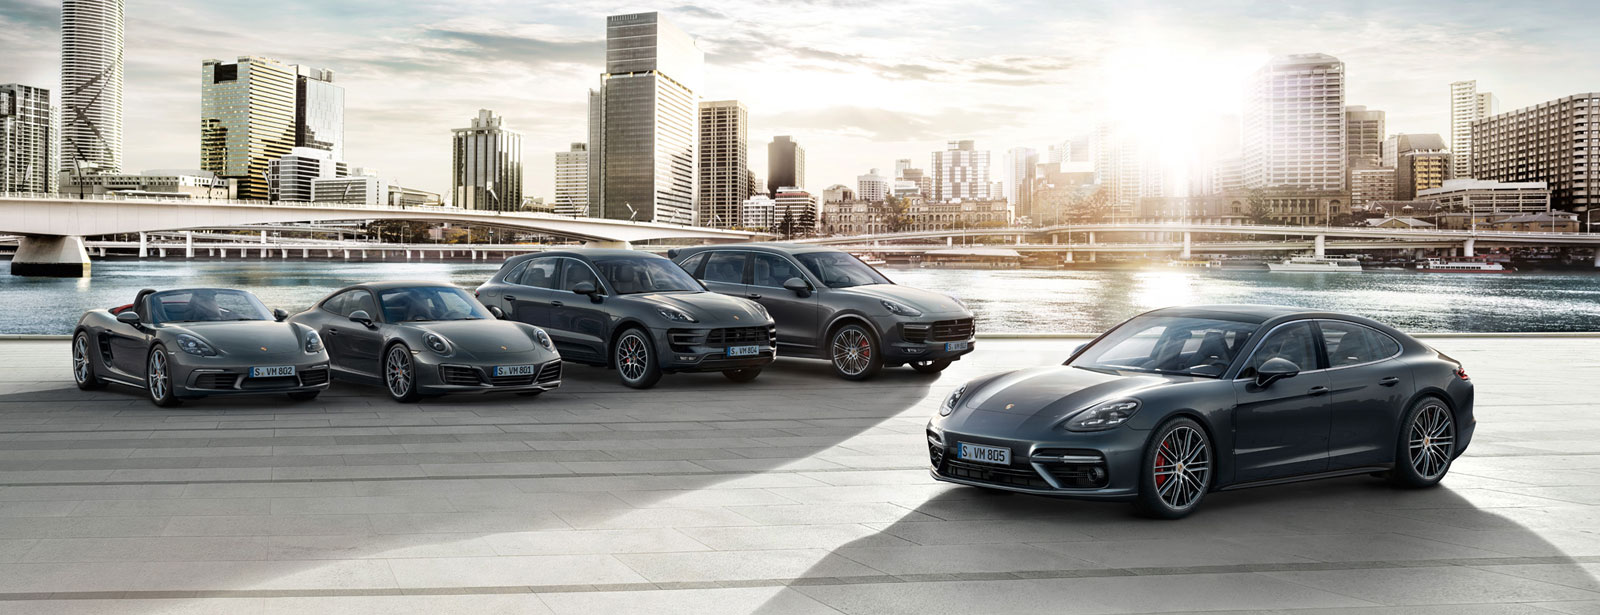 Porsche Starts Car Subscription Service